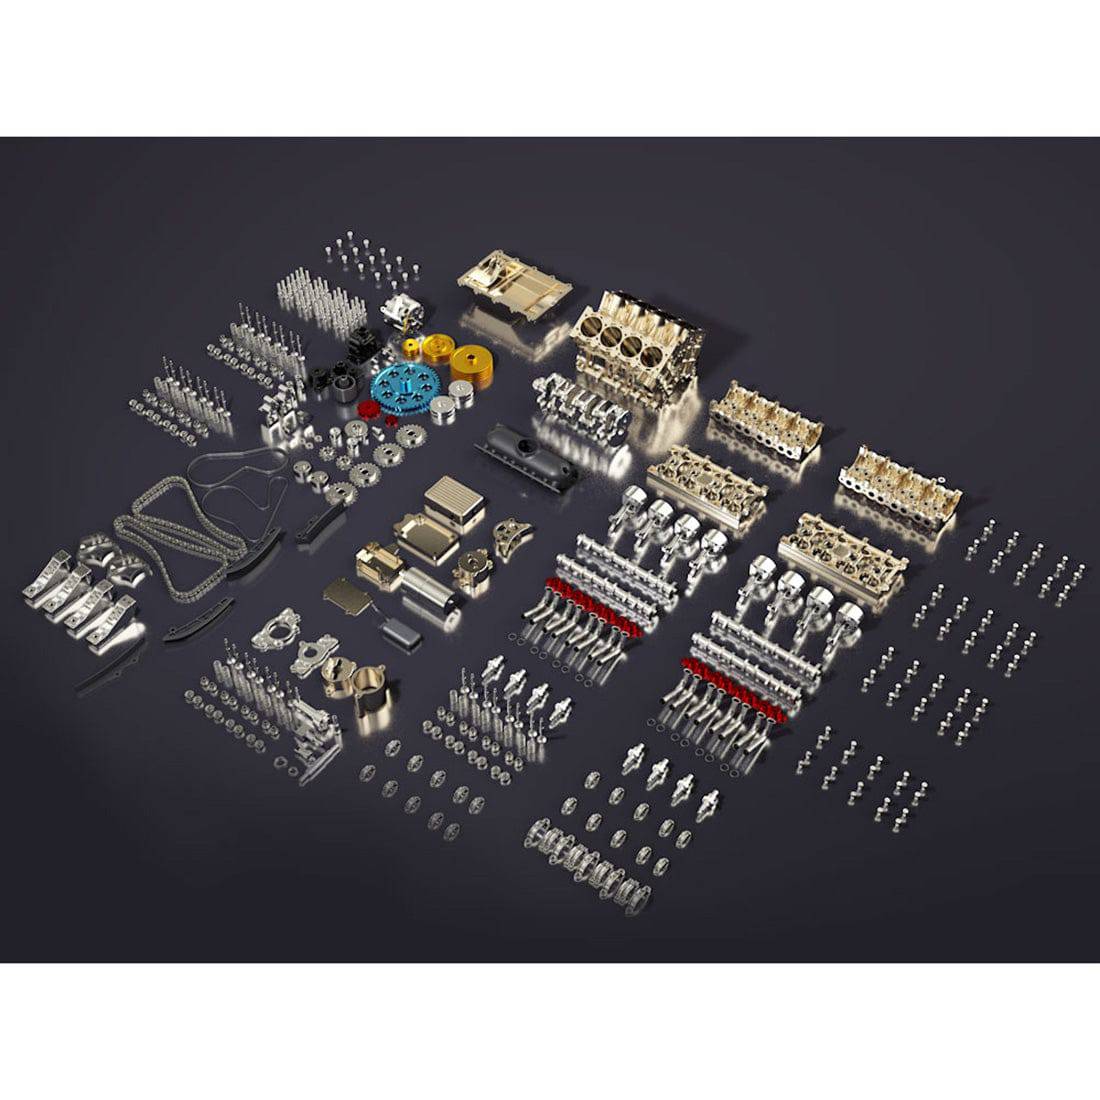 Building a V8 Engine Model Kit. Assembling and Starting the V8